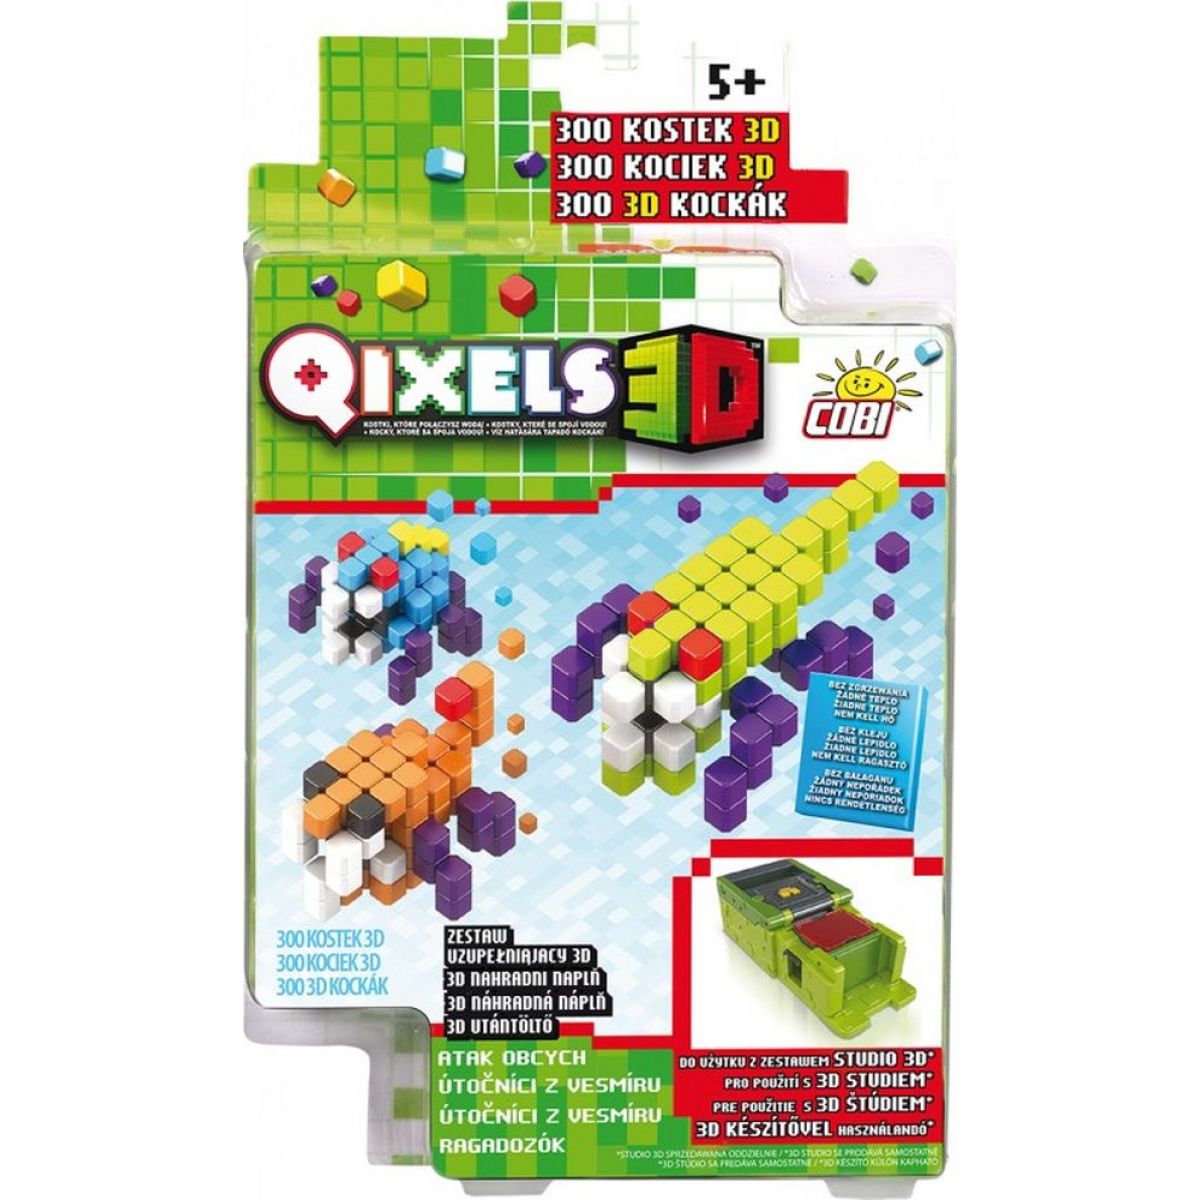 Qixels 3D Tématická sada - Útočníci z vesmíru